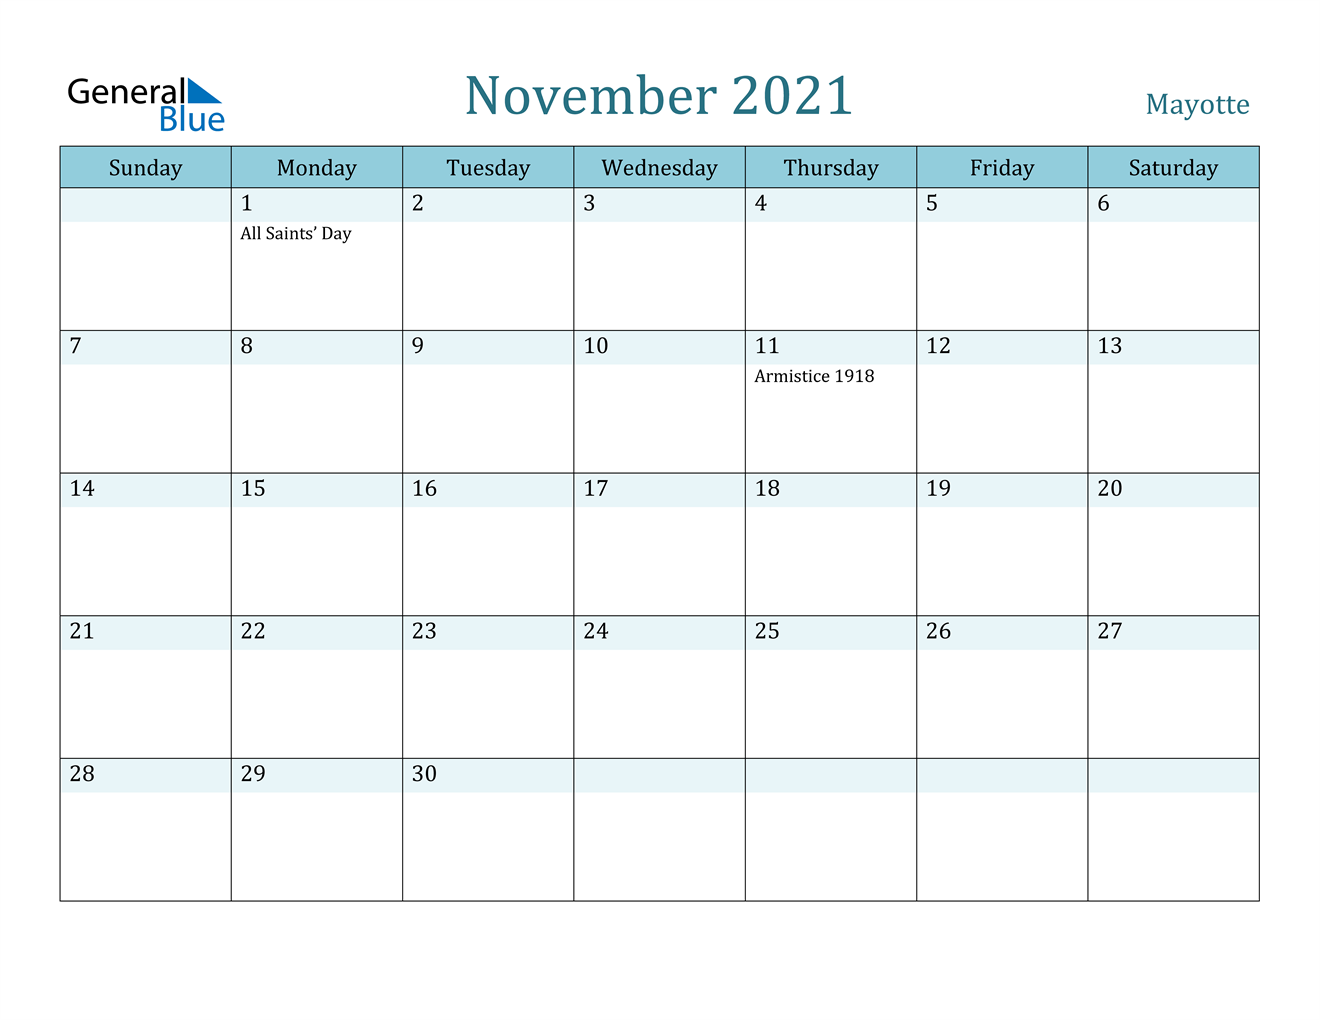 November 2021 Calendar - Mayotte